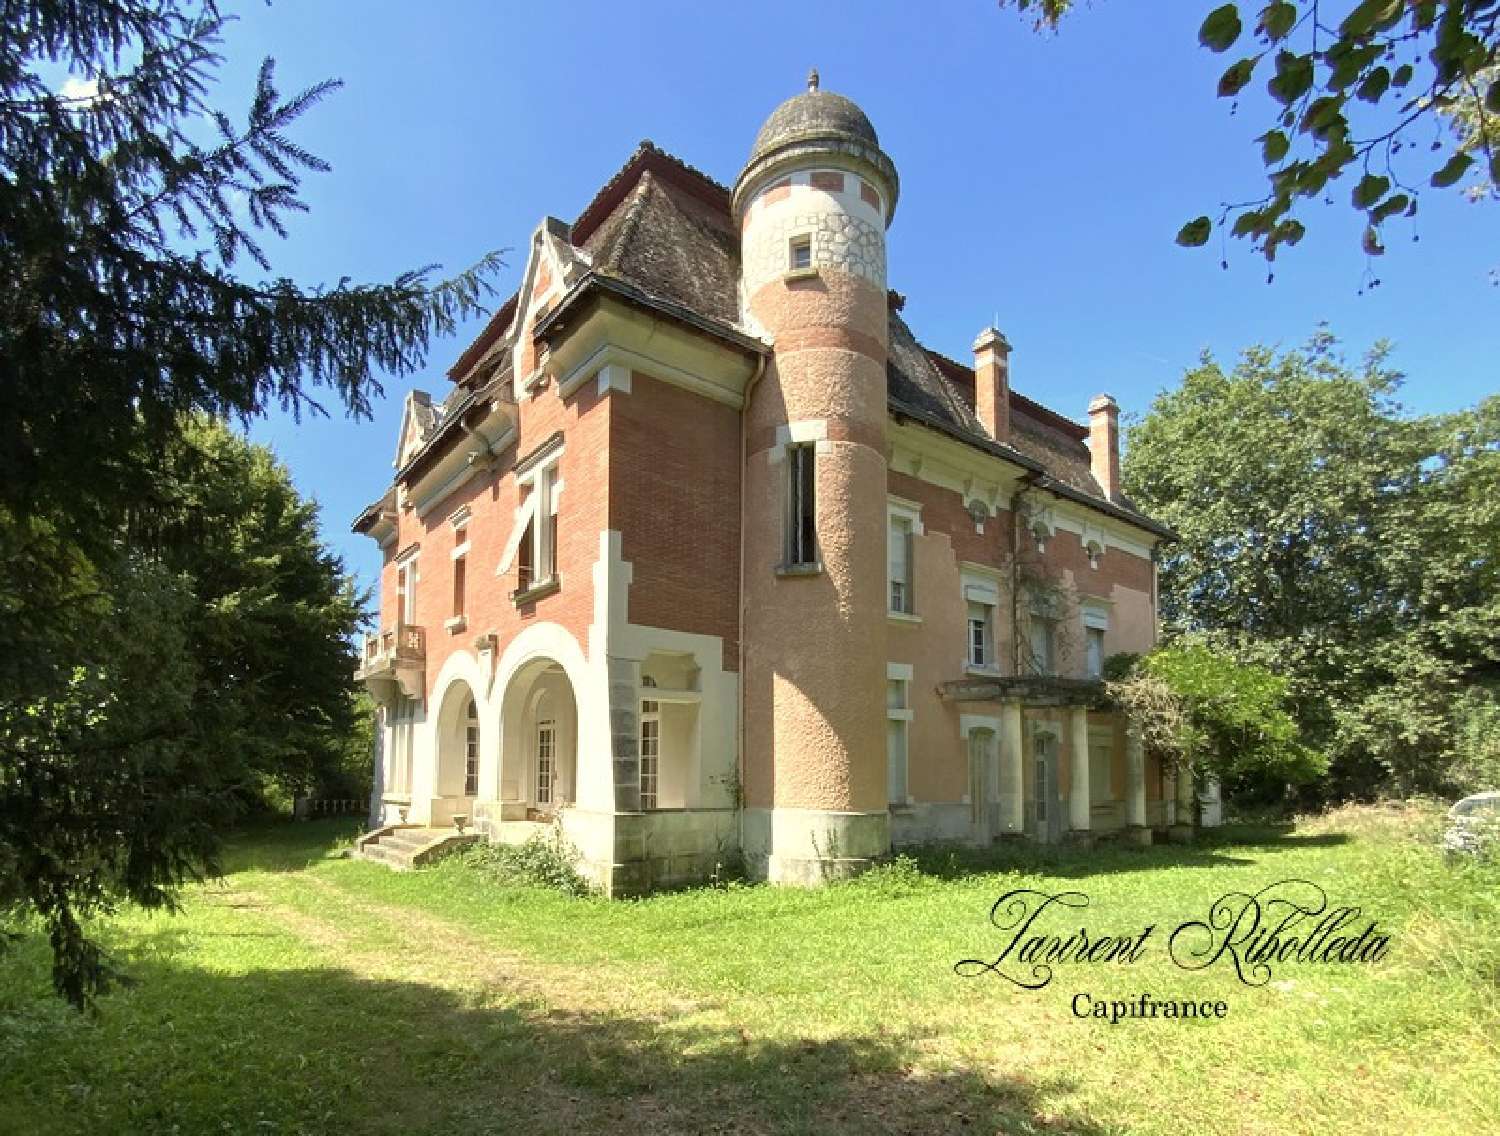  à vendre château Montauban Tarn-et-Garonne 8